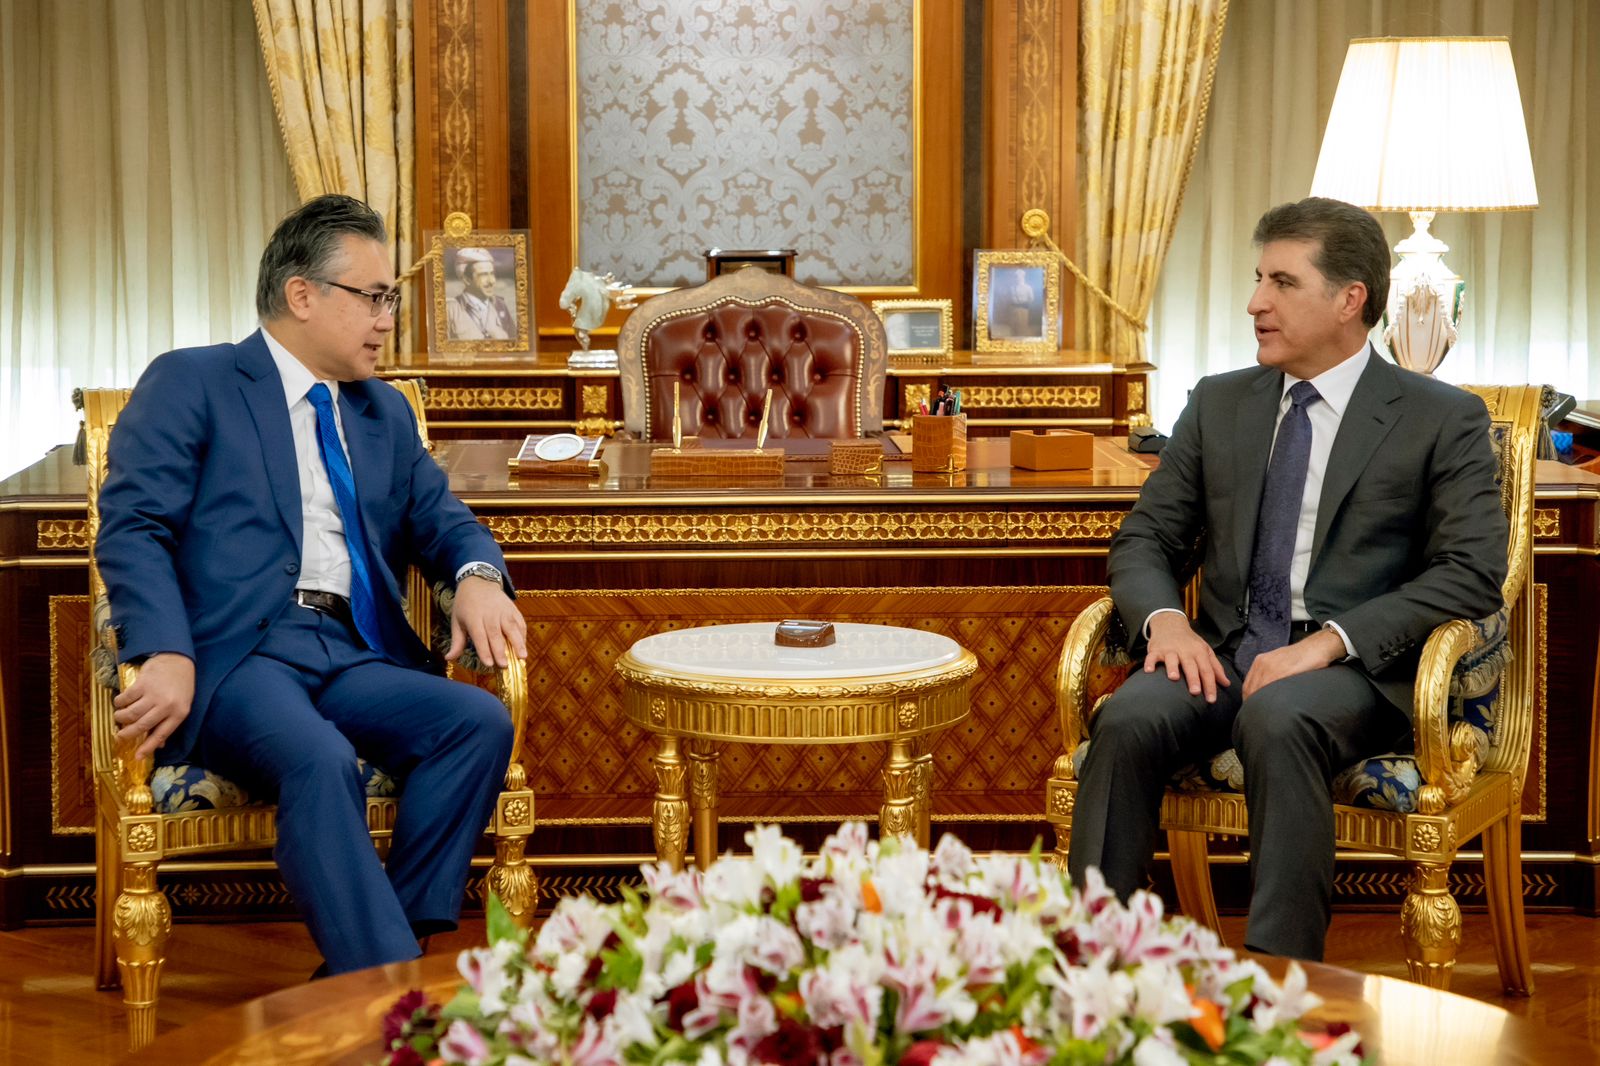 Japan's ambassador, Kurdistan's president discuss cooperation prospects